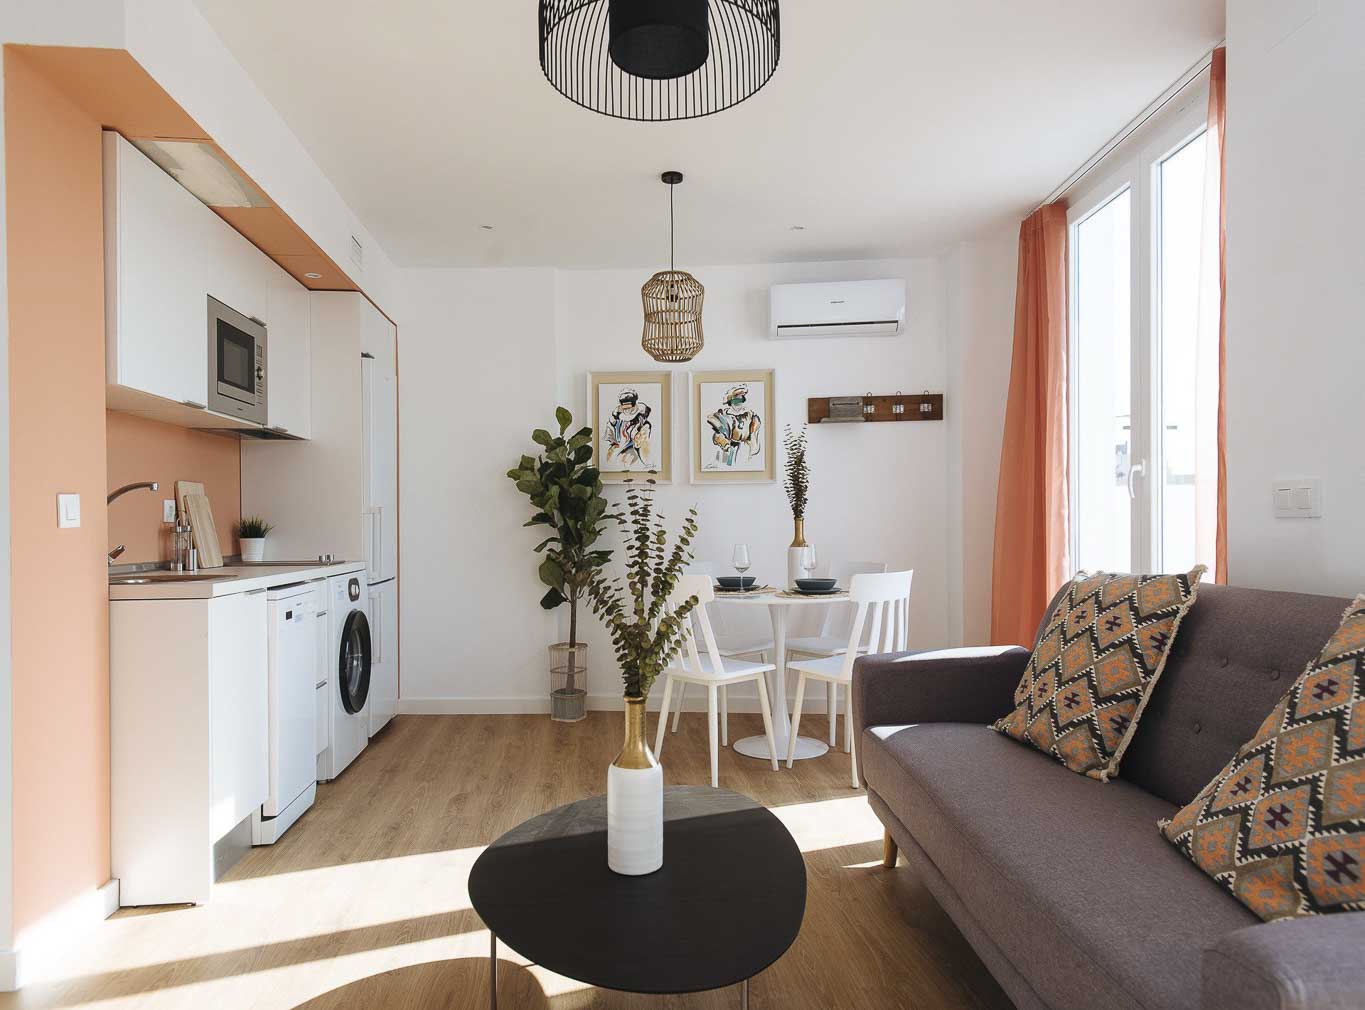 Lola 14 Tourist apartments with pool solarium in Seville – Magno Apartments